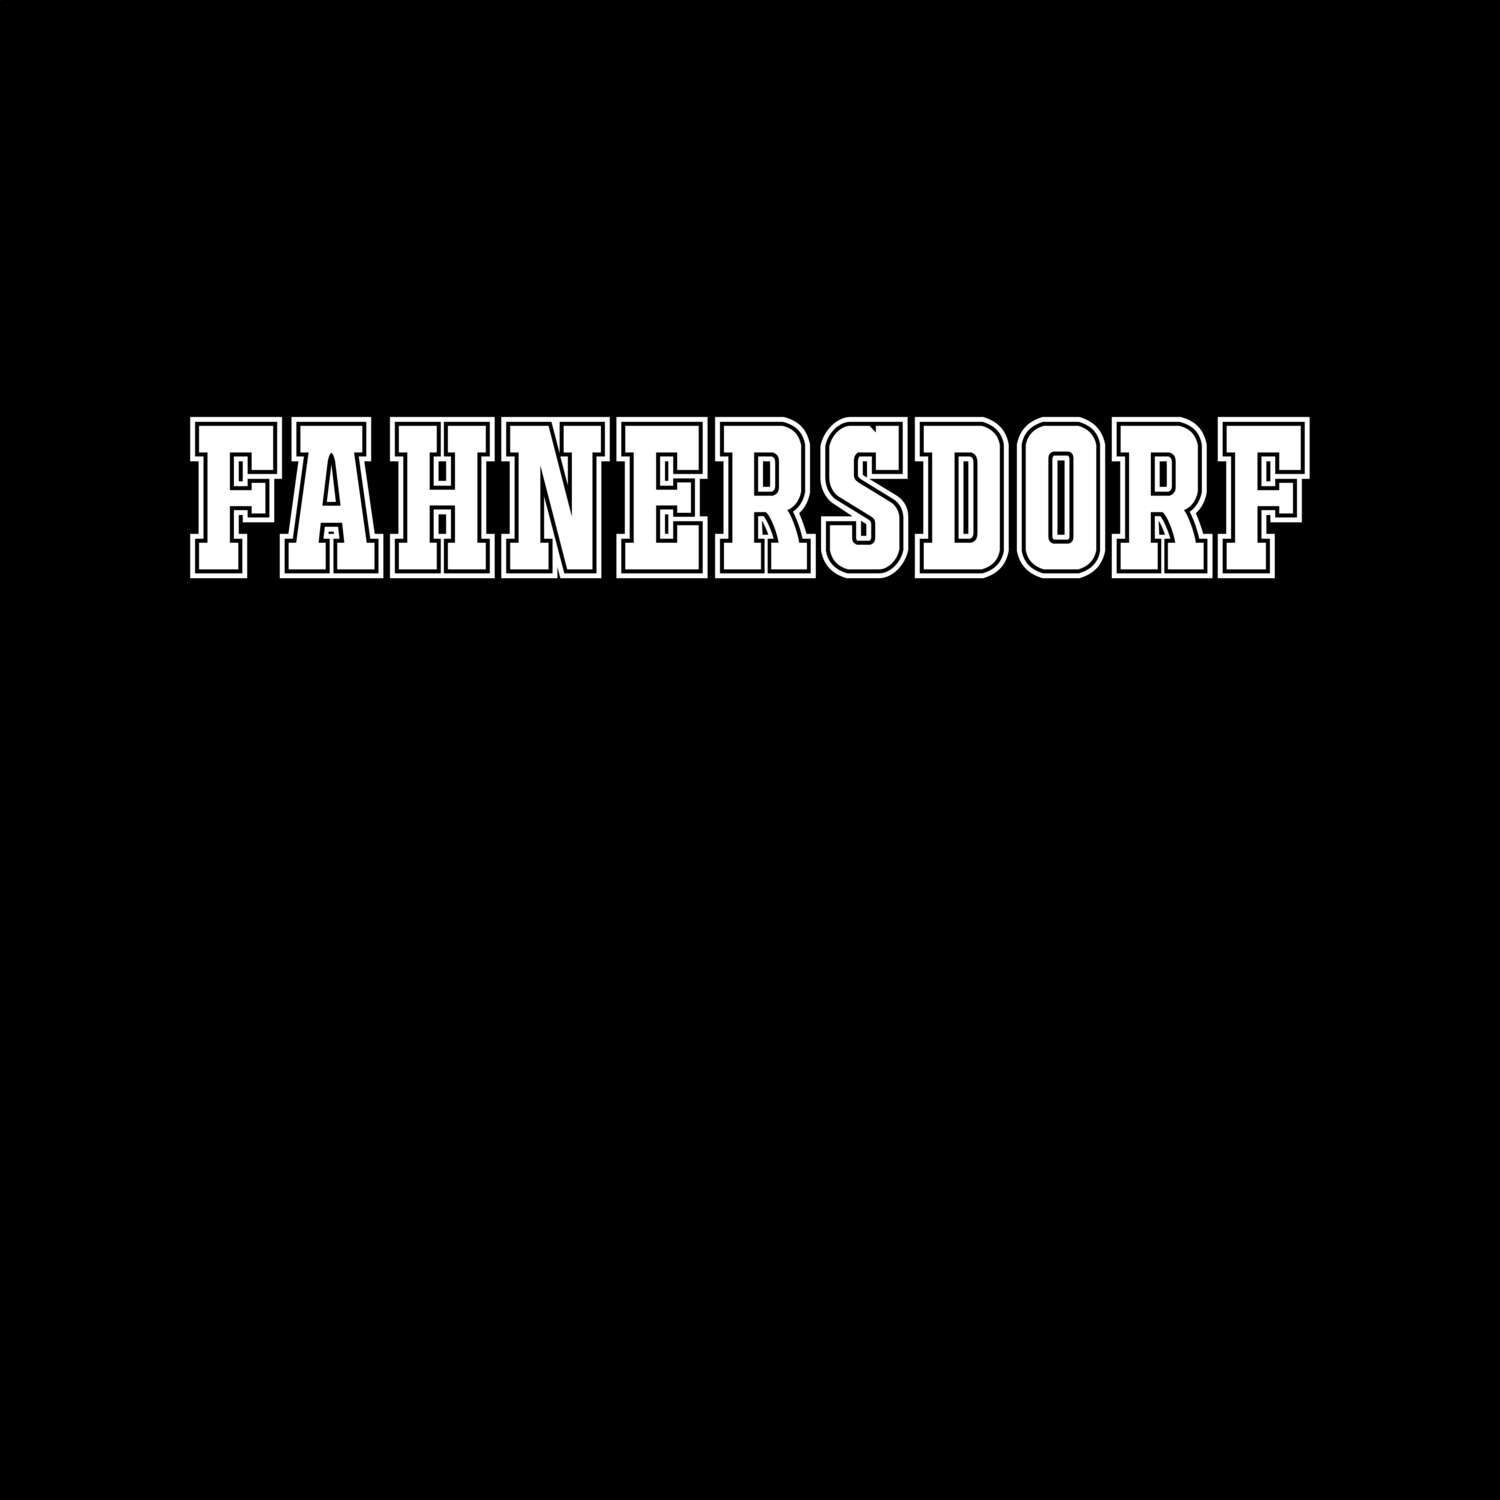 Fahnersdorf T-Shirt »Classic«